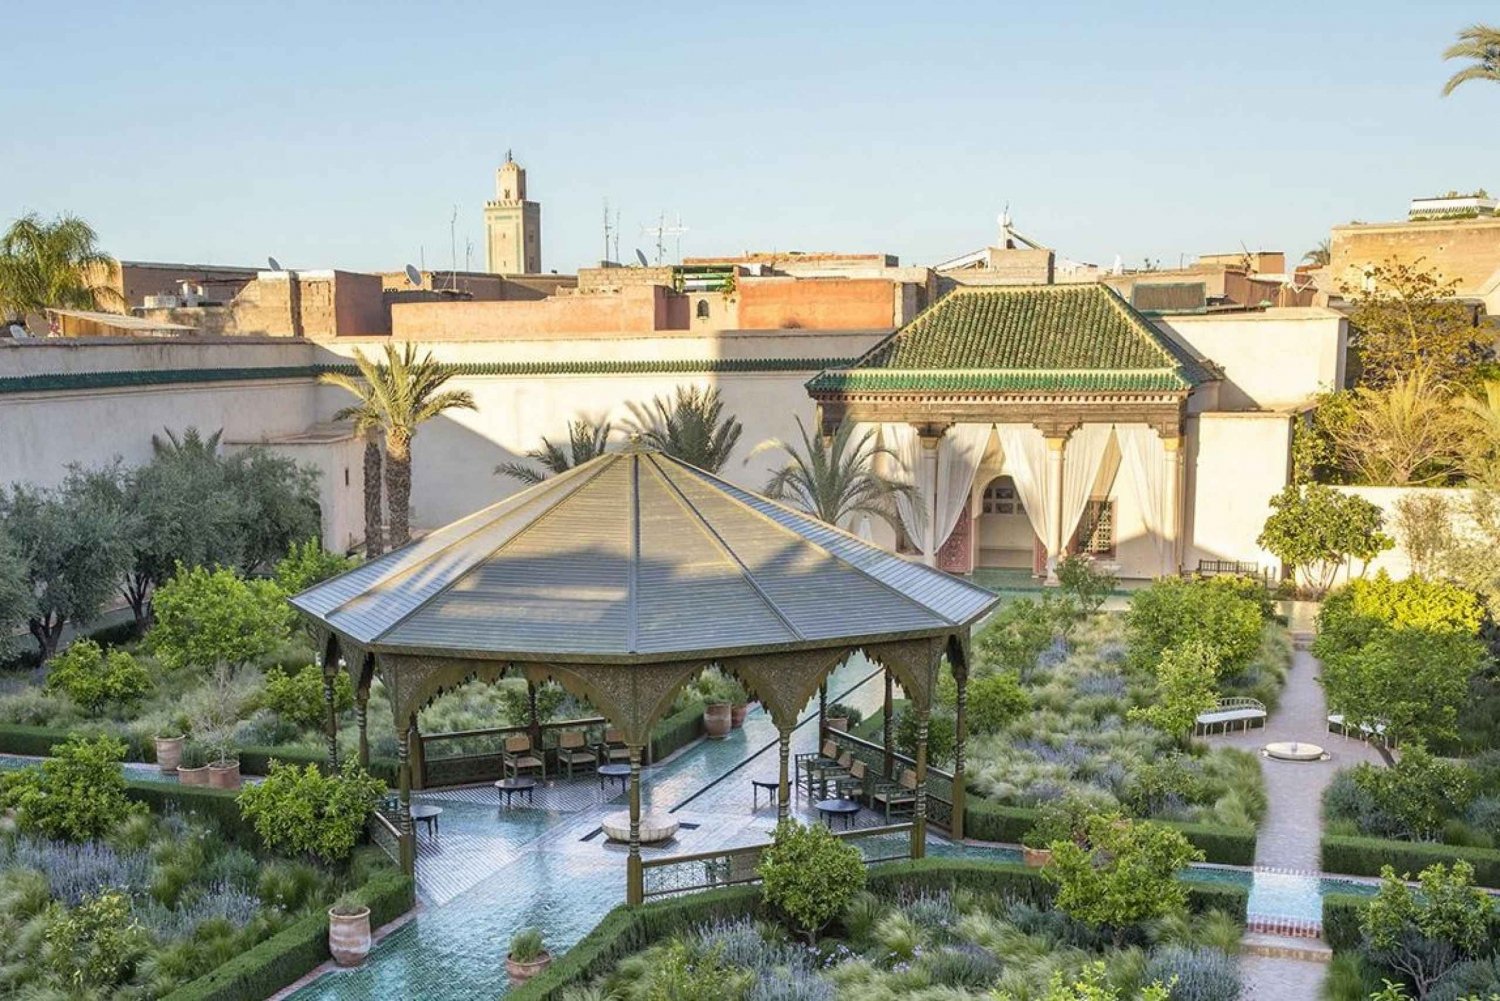 Marrakech: Ben Youssef Madrasa, hemmelig hage og medinatur